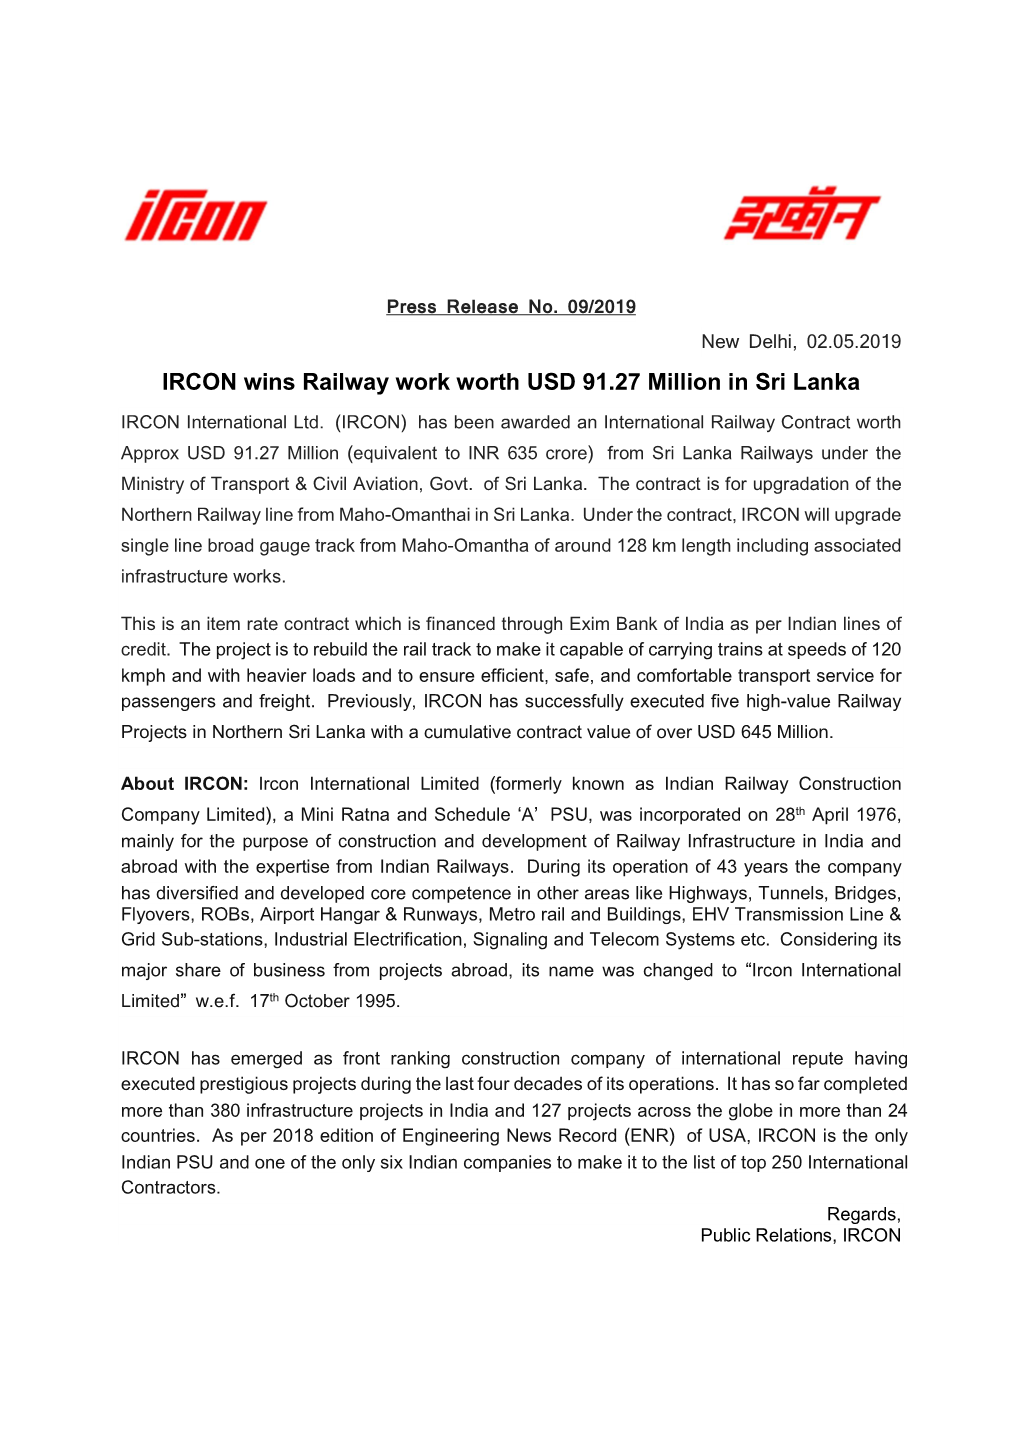 IRCON Wins Railway Work Worth USD 91.27 Million in Sri Lanka IRCON International Ltd